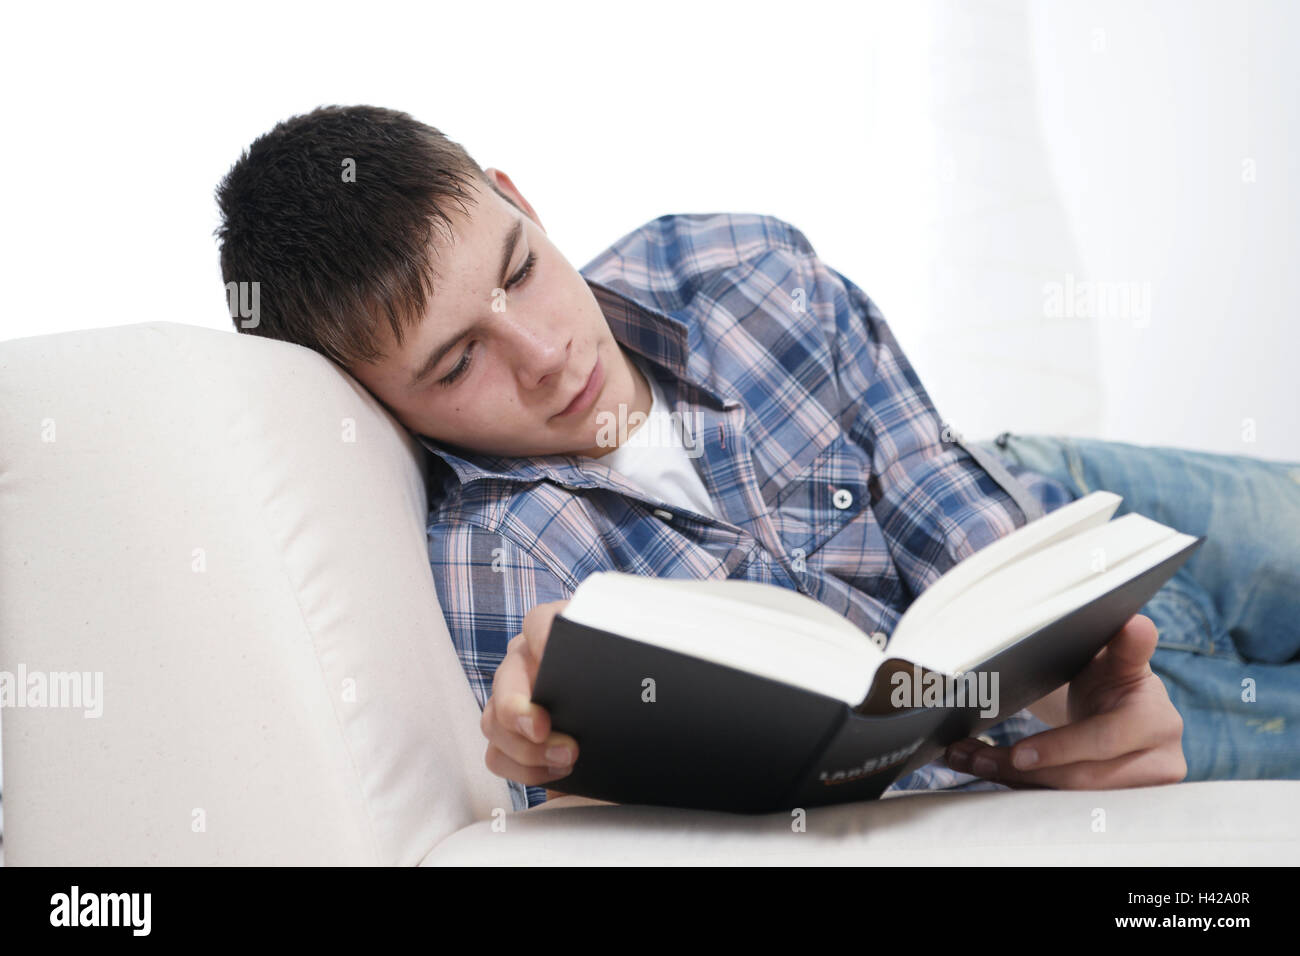 Teenager, boy, lying, sofa, reading, sidewise, model released, Stock Photo